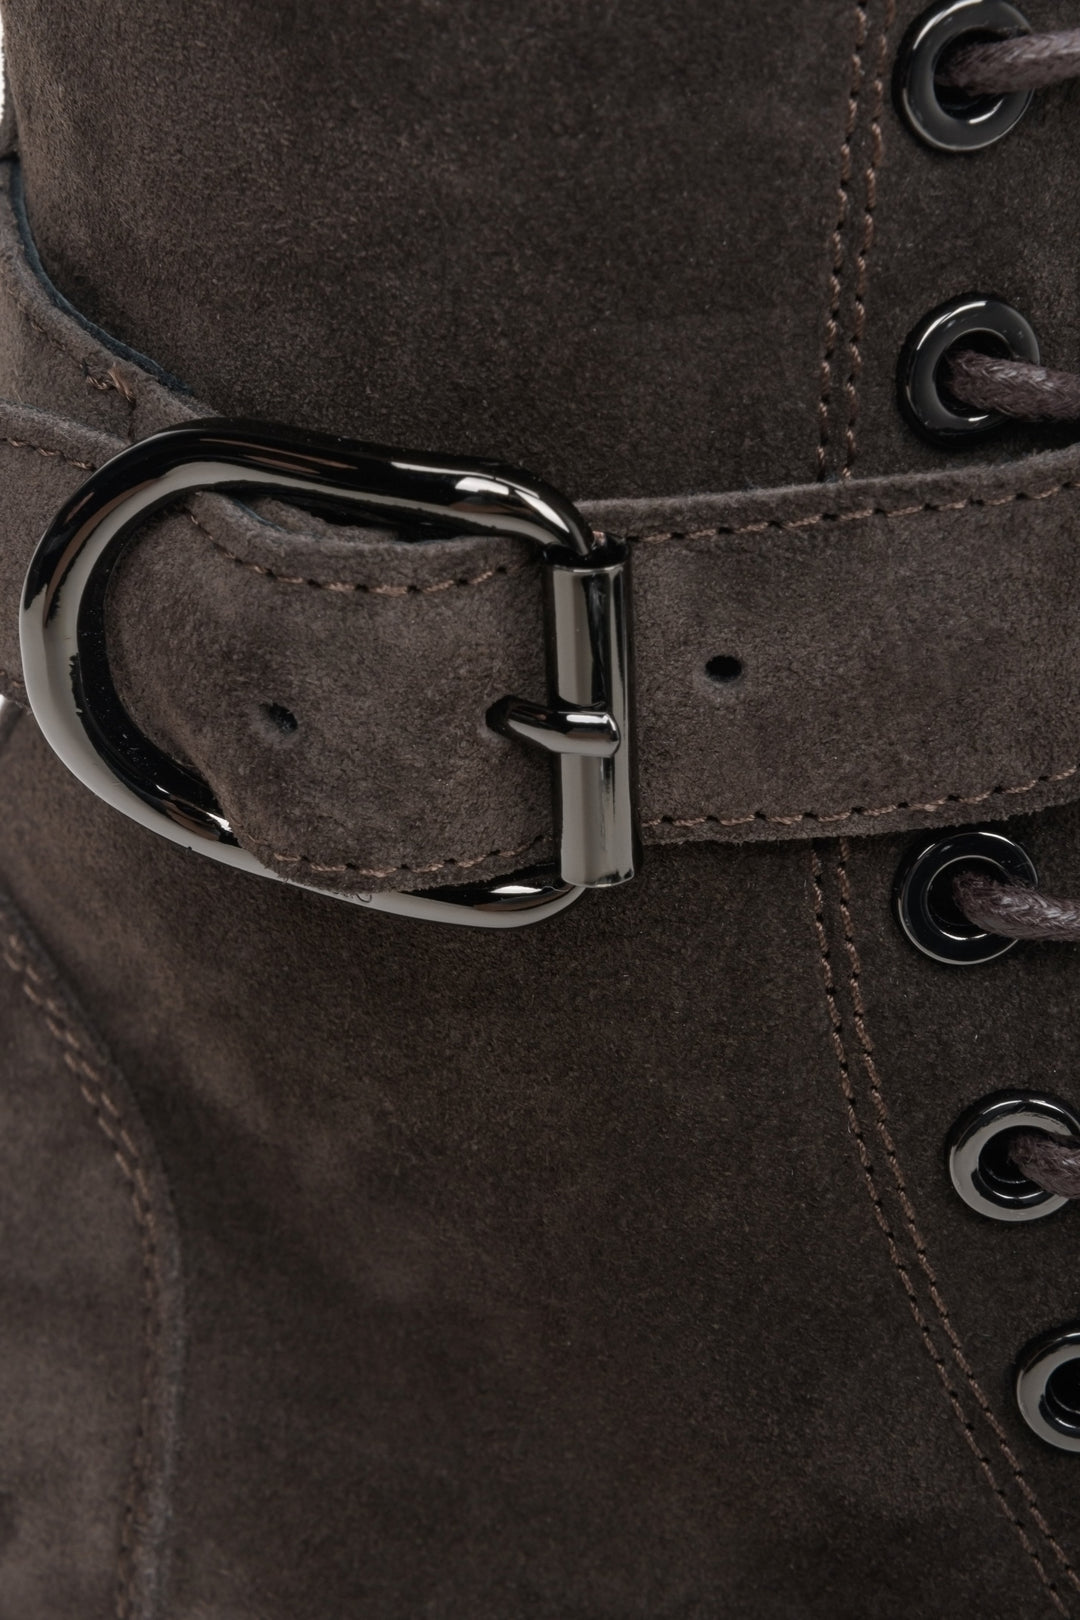 Women's dark brown velour work boots by Estro - close-up on the details.